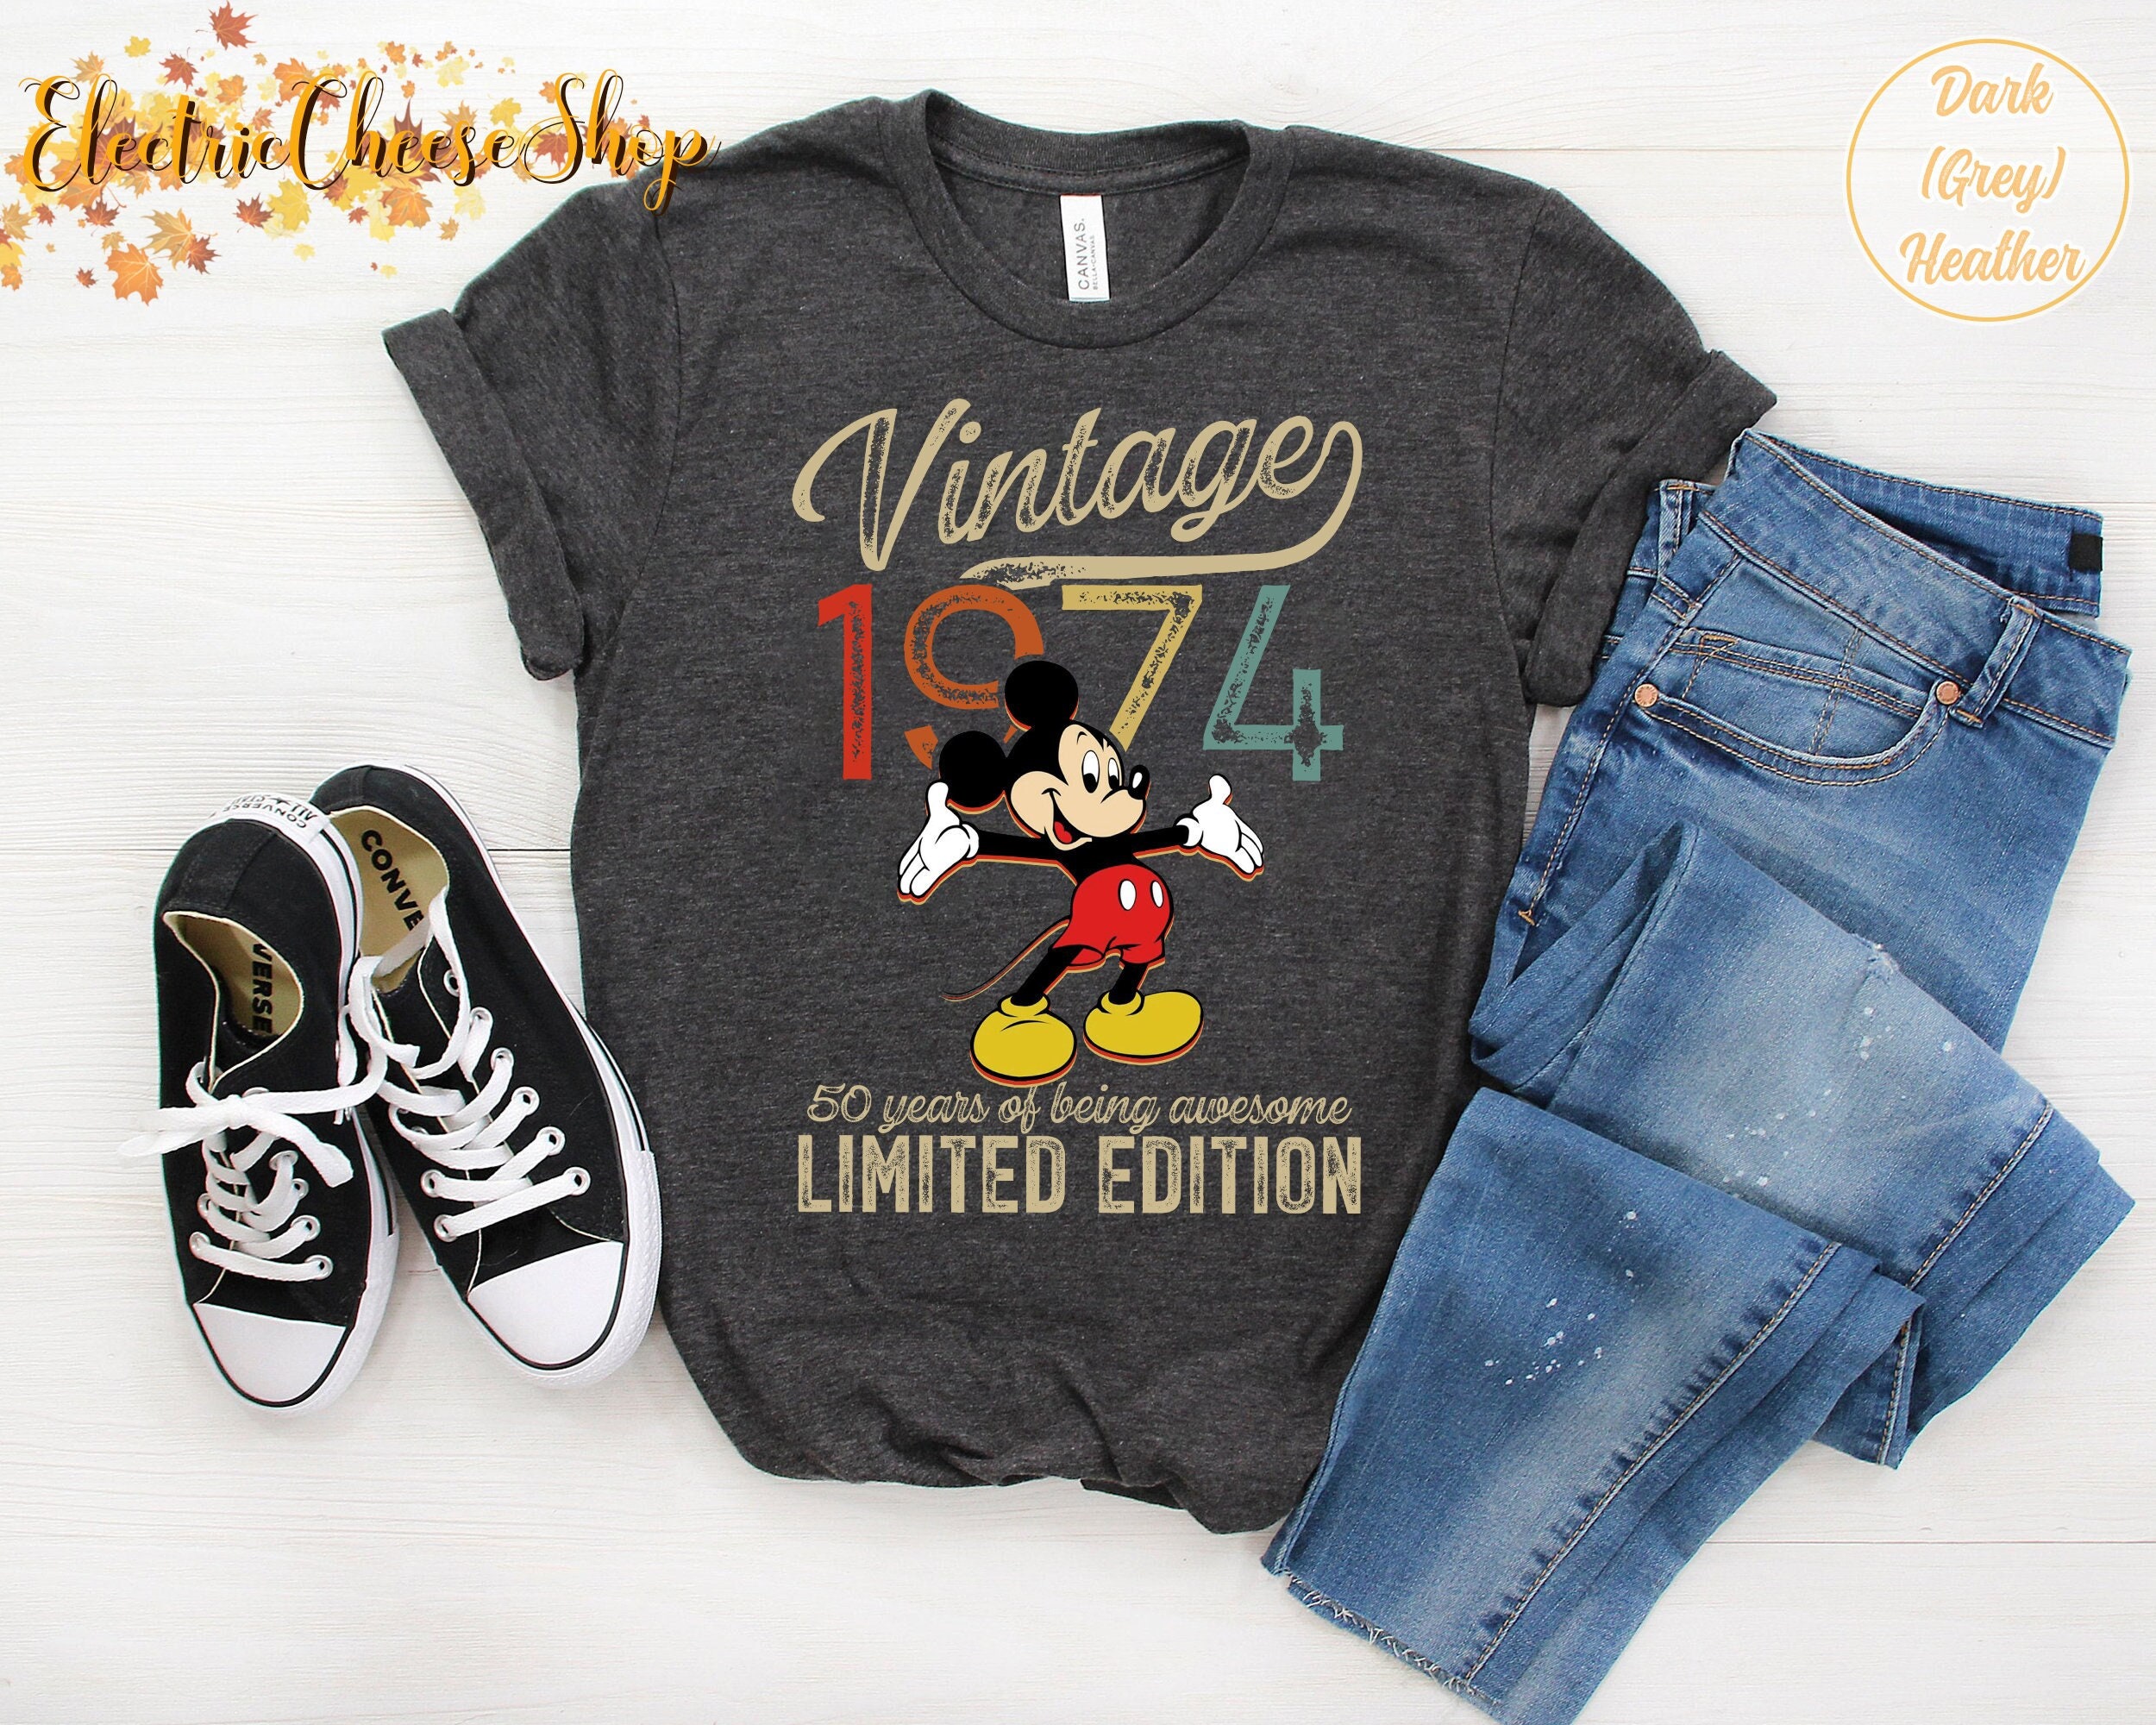 unübertrefflich Vintage Mickey Mouse Shirt - Etsy to Up Off 60% 